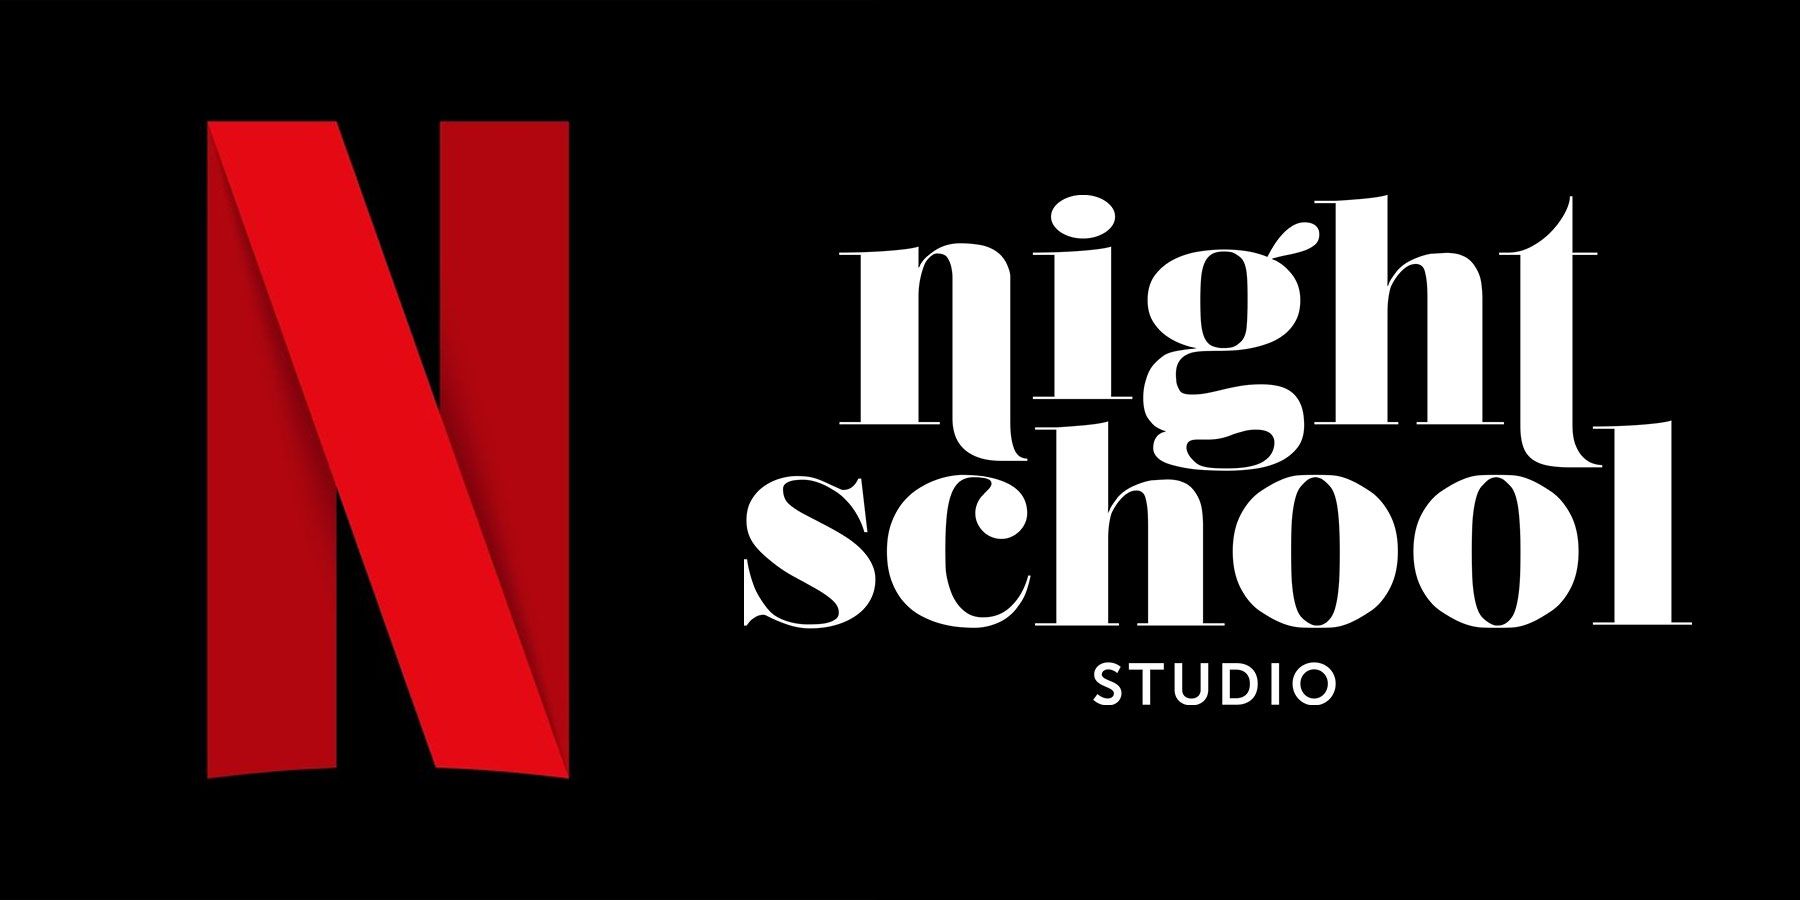 netflix-night-school-studio